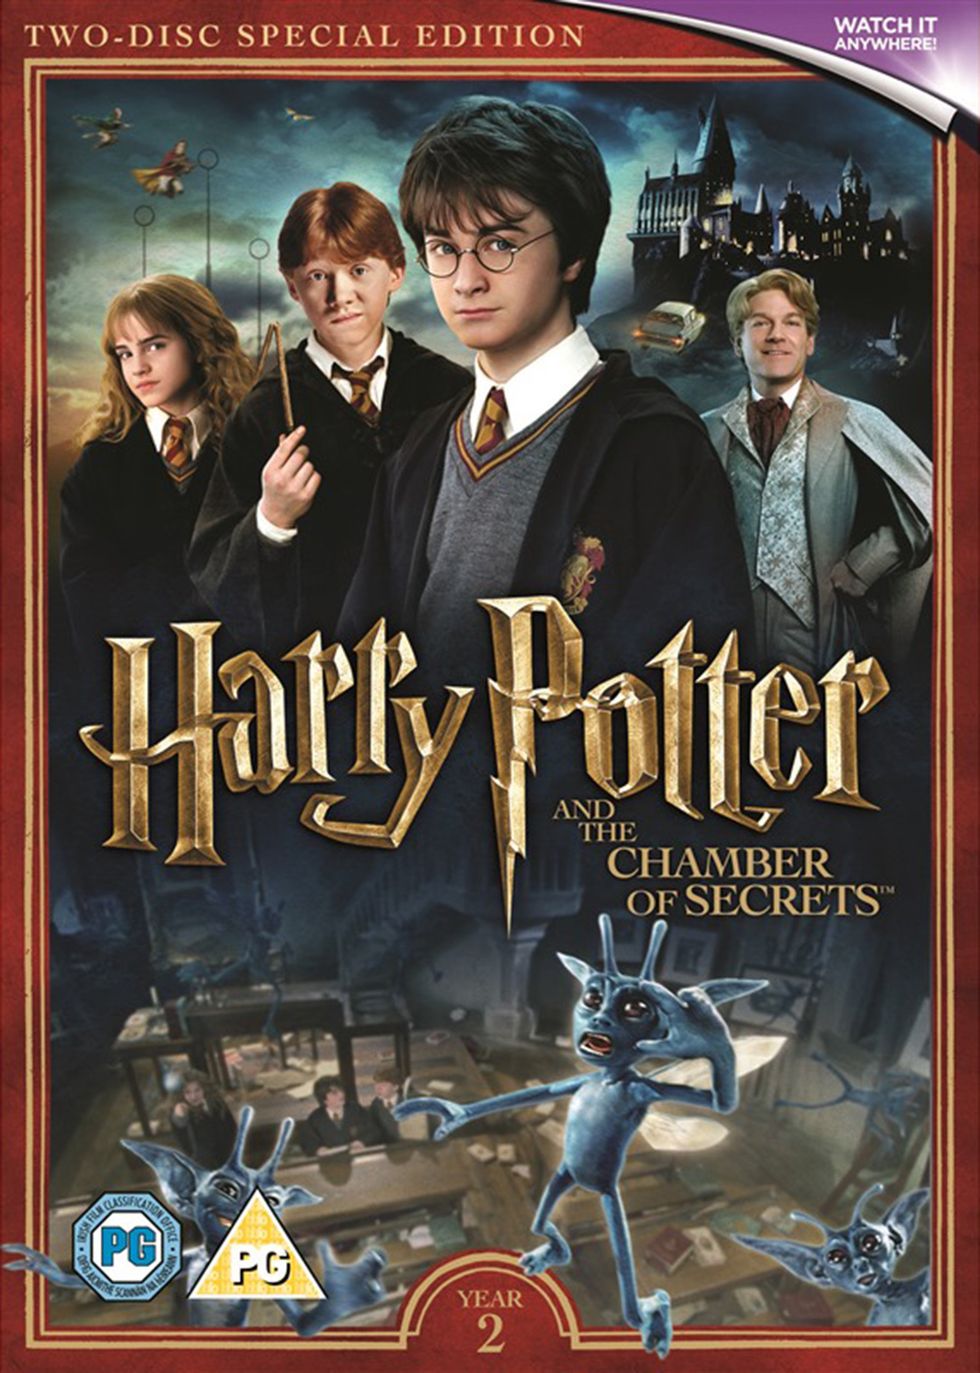 Potter Movie Redesign - Harry Potter DVD